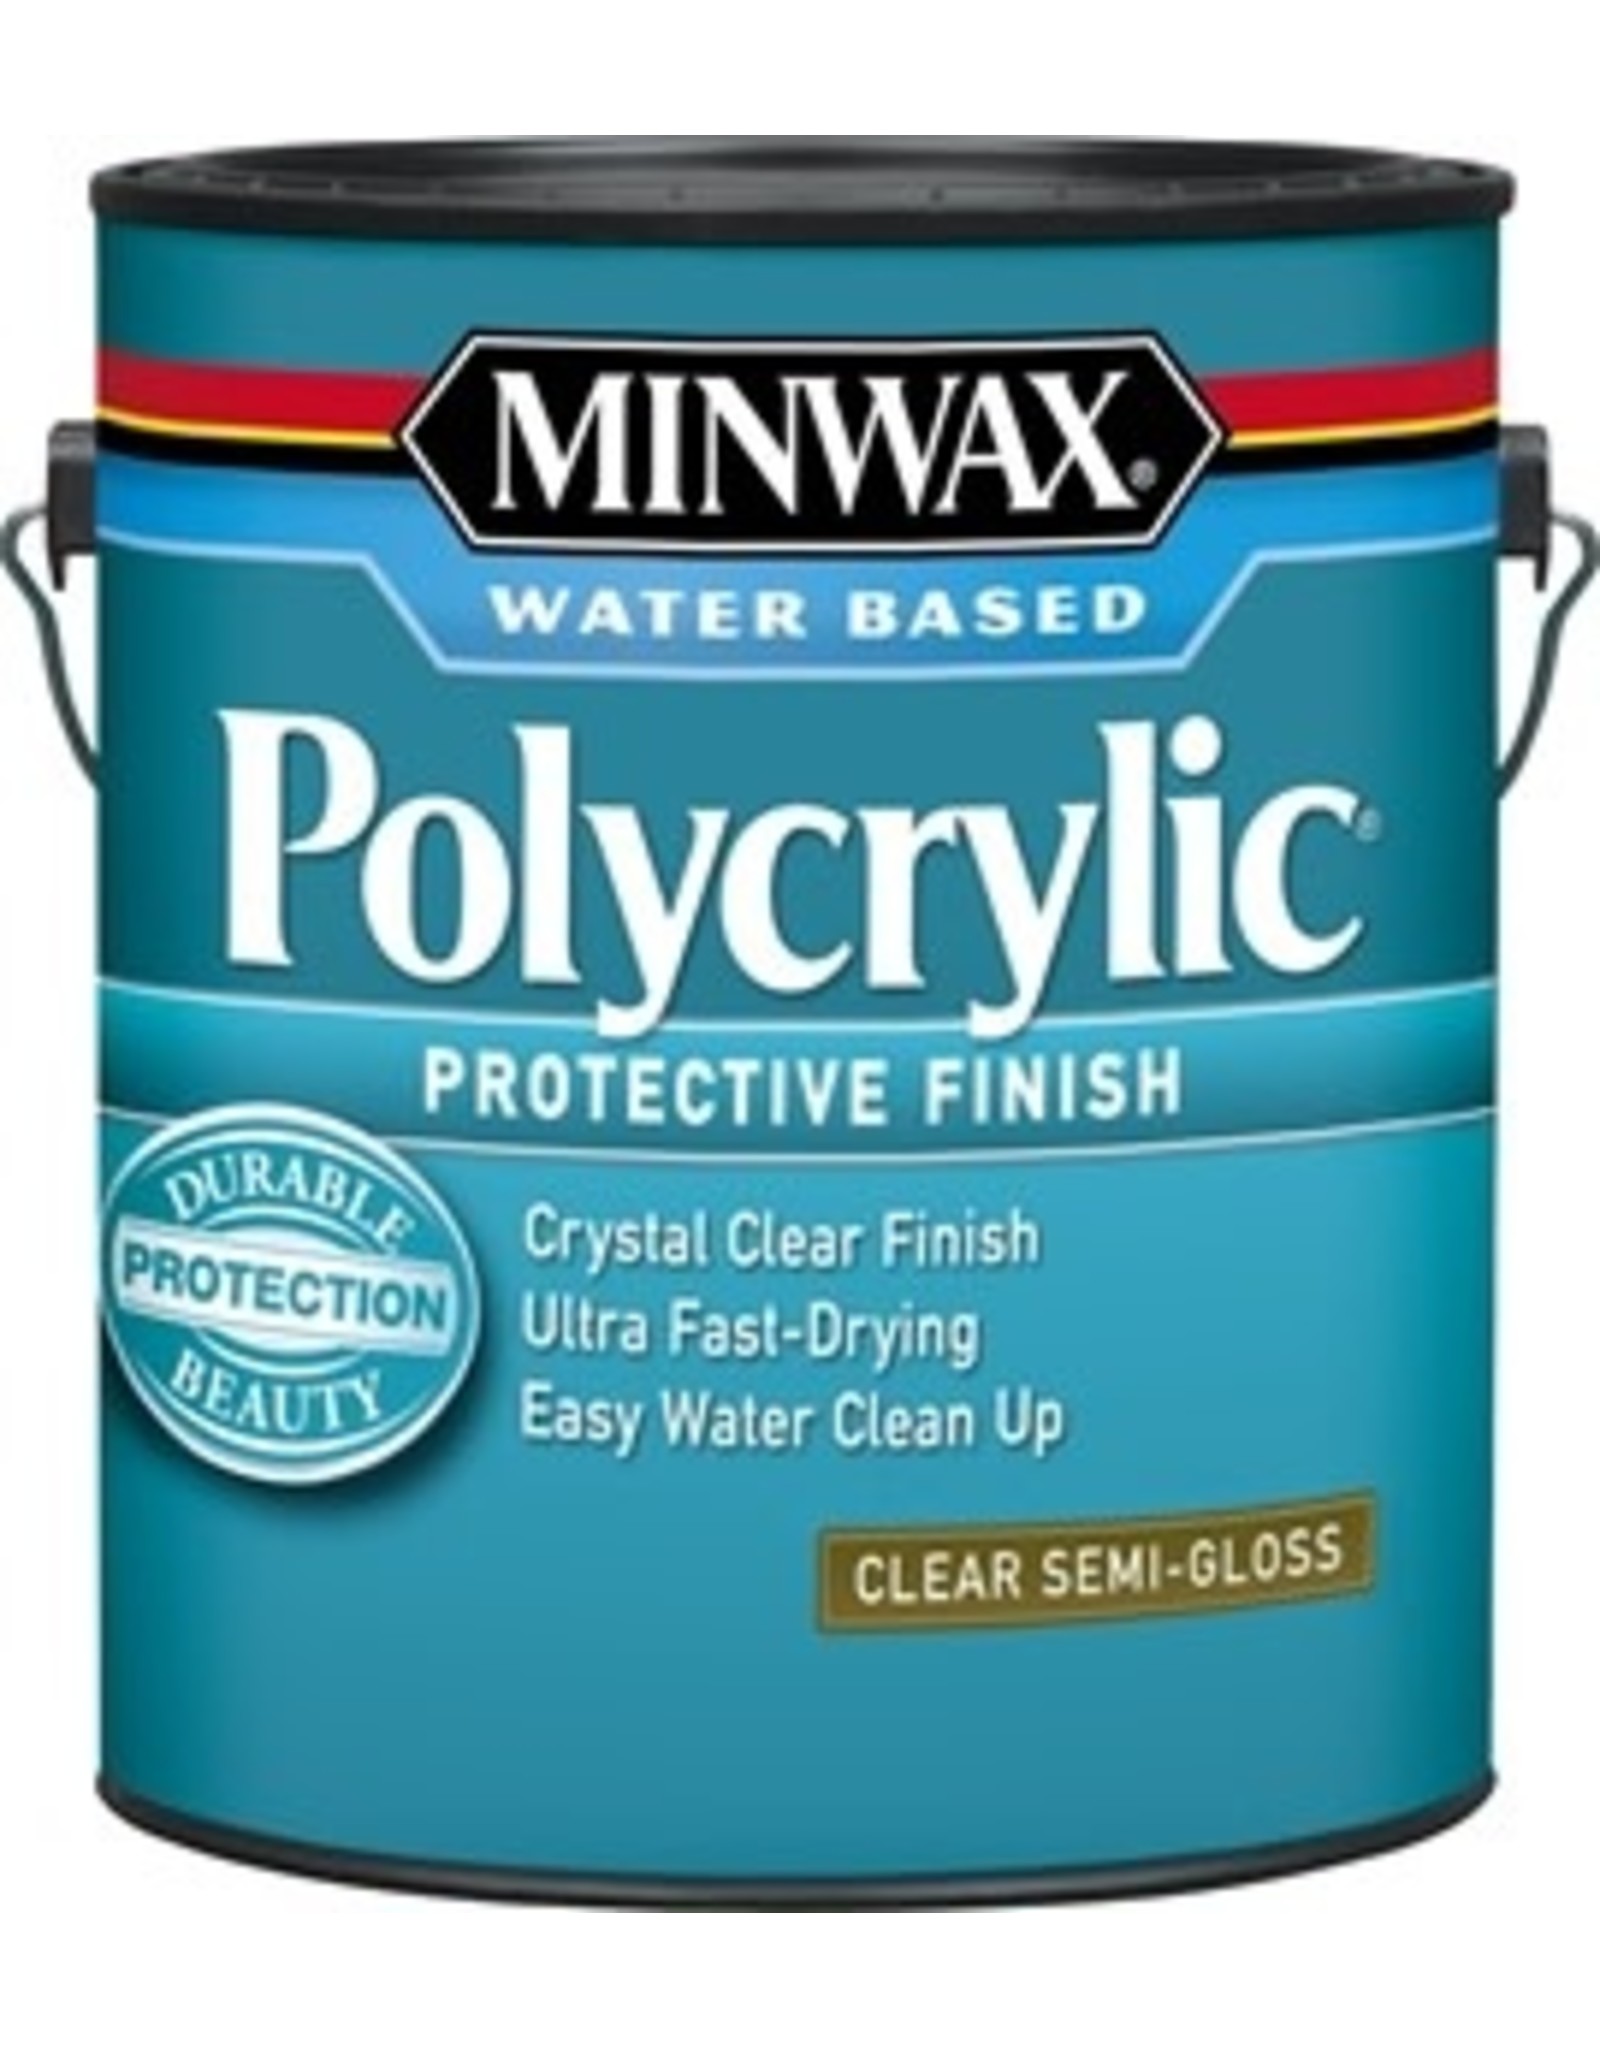 Minwax Minwax Polycrylic 14444000 Protective Finish Paint, Semi-Gloss, Liquid, Crystal Clear, 1 gal, Can*